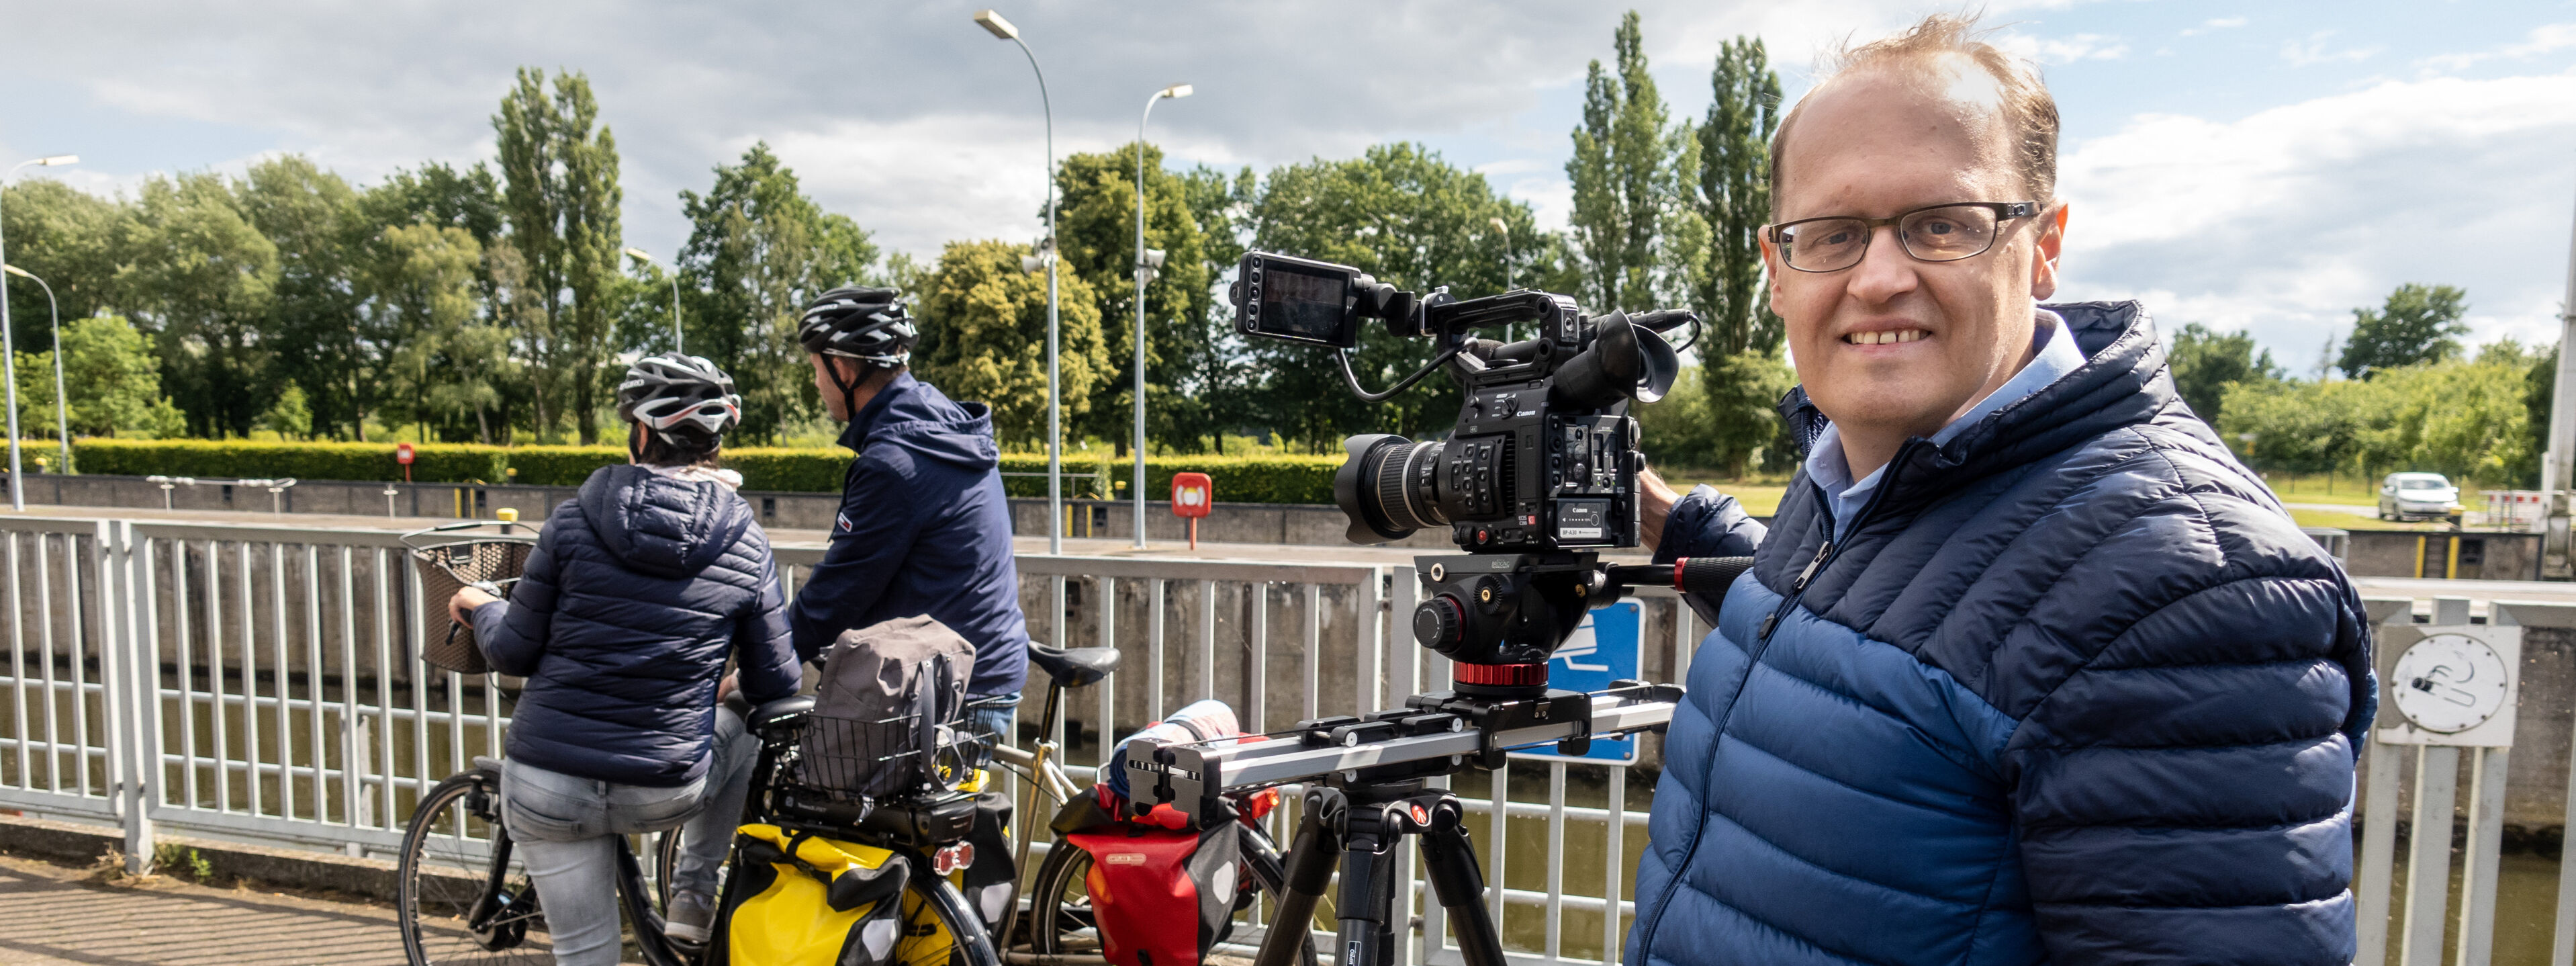 Director / cameraman with digital cinema camera for image film shoot